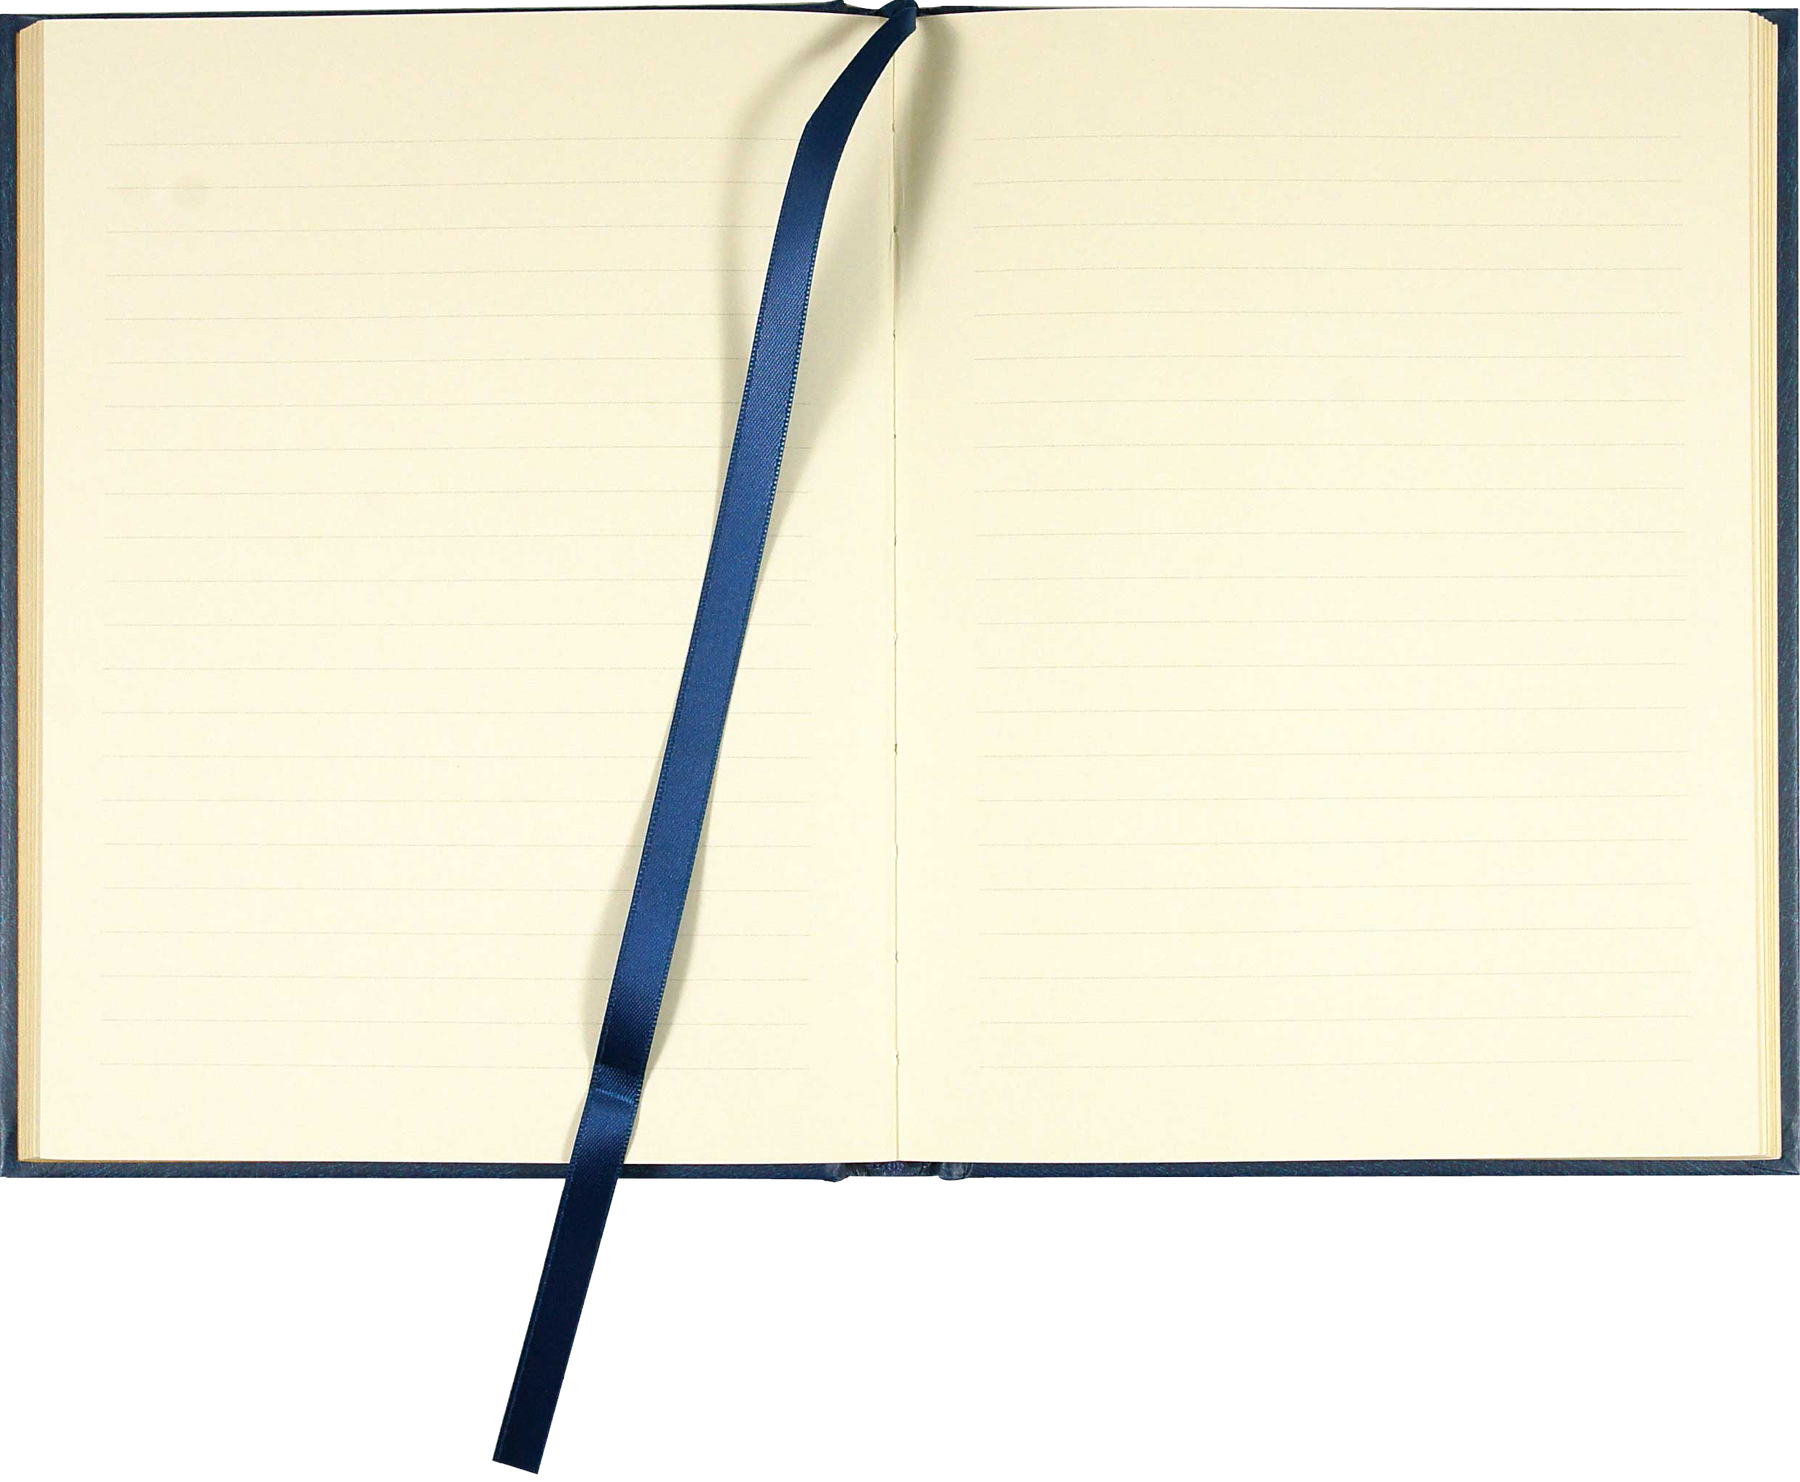 Celestial Journal Notebook Alchemy Sun Moon (Blank Lined Journal, Small  5.25 x 8): 9781532816413: Papercute Notebooks and Journals: Books 